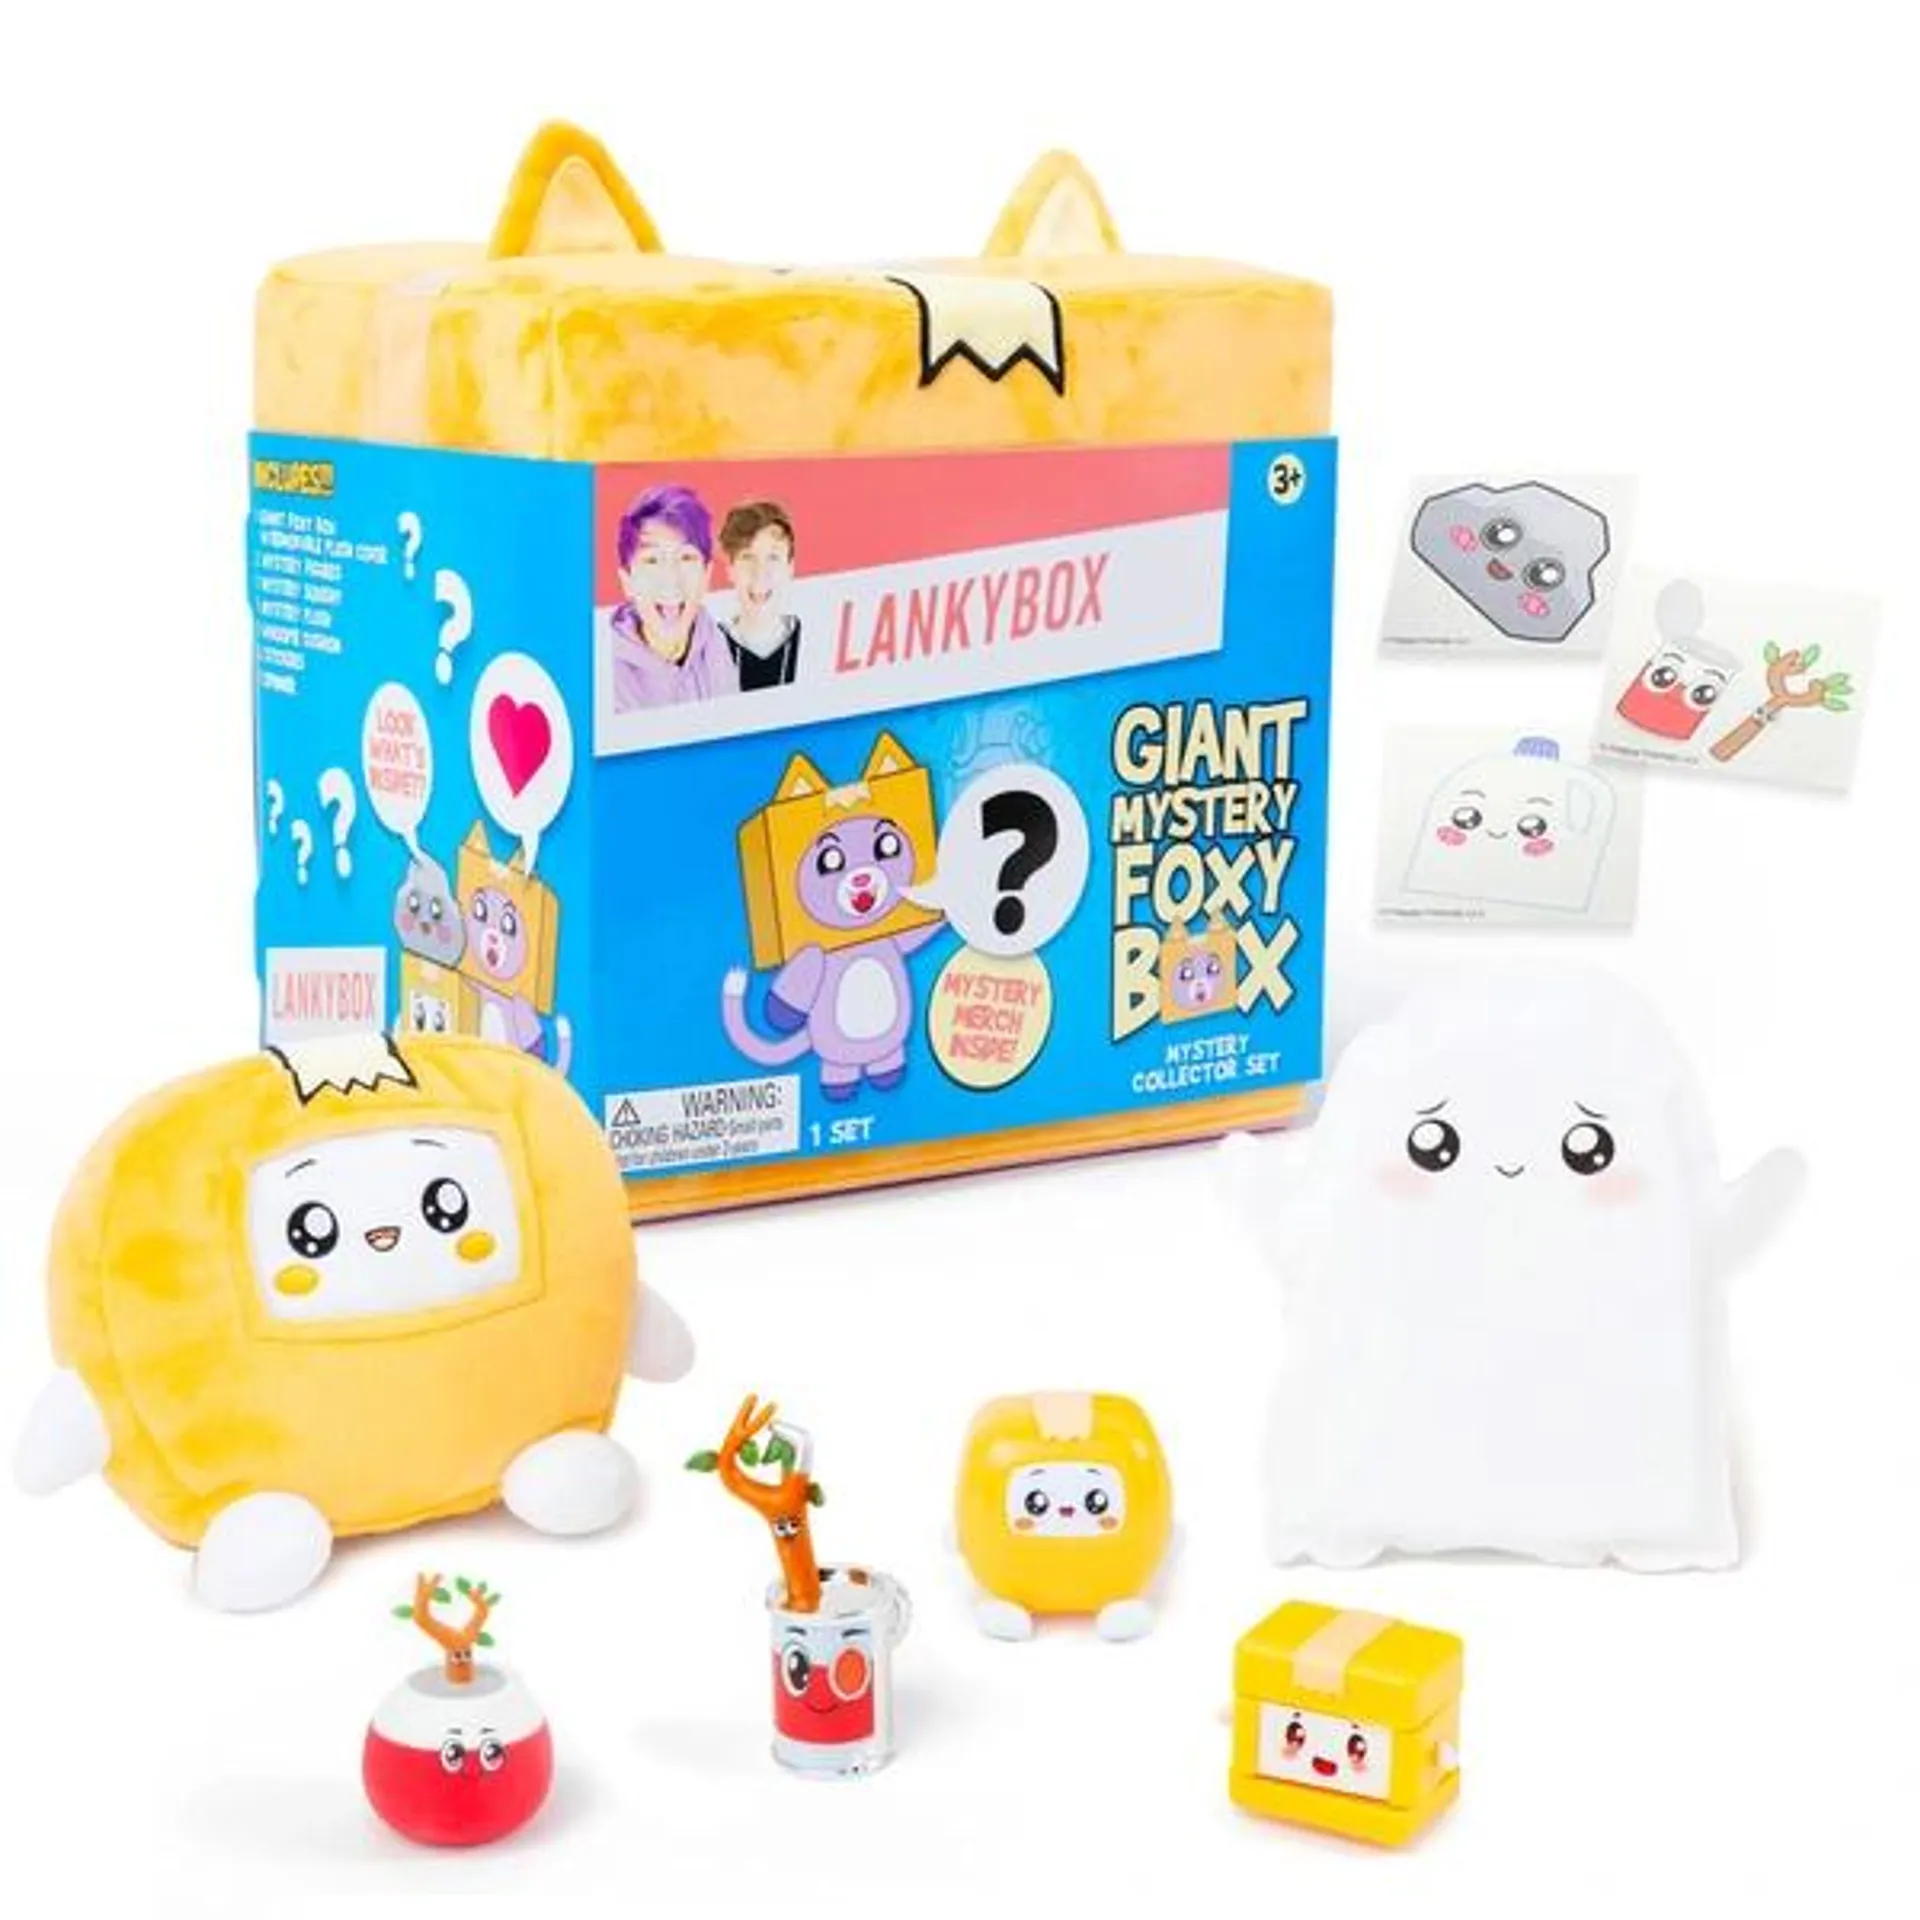 Lankybox Giant Mystery Foxy Box Plush Toy Set